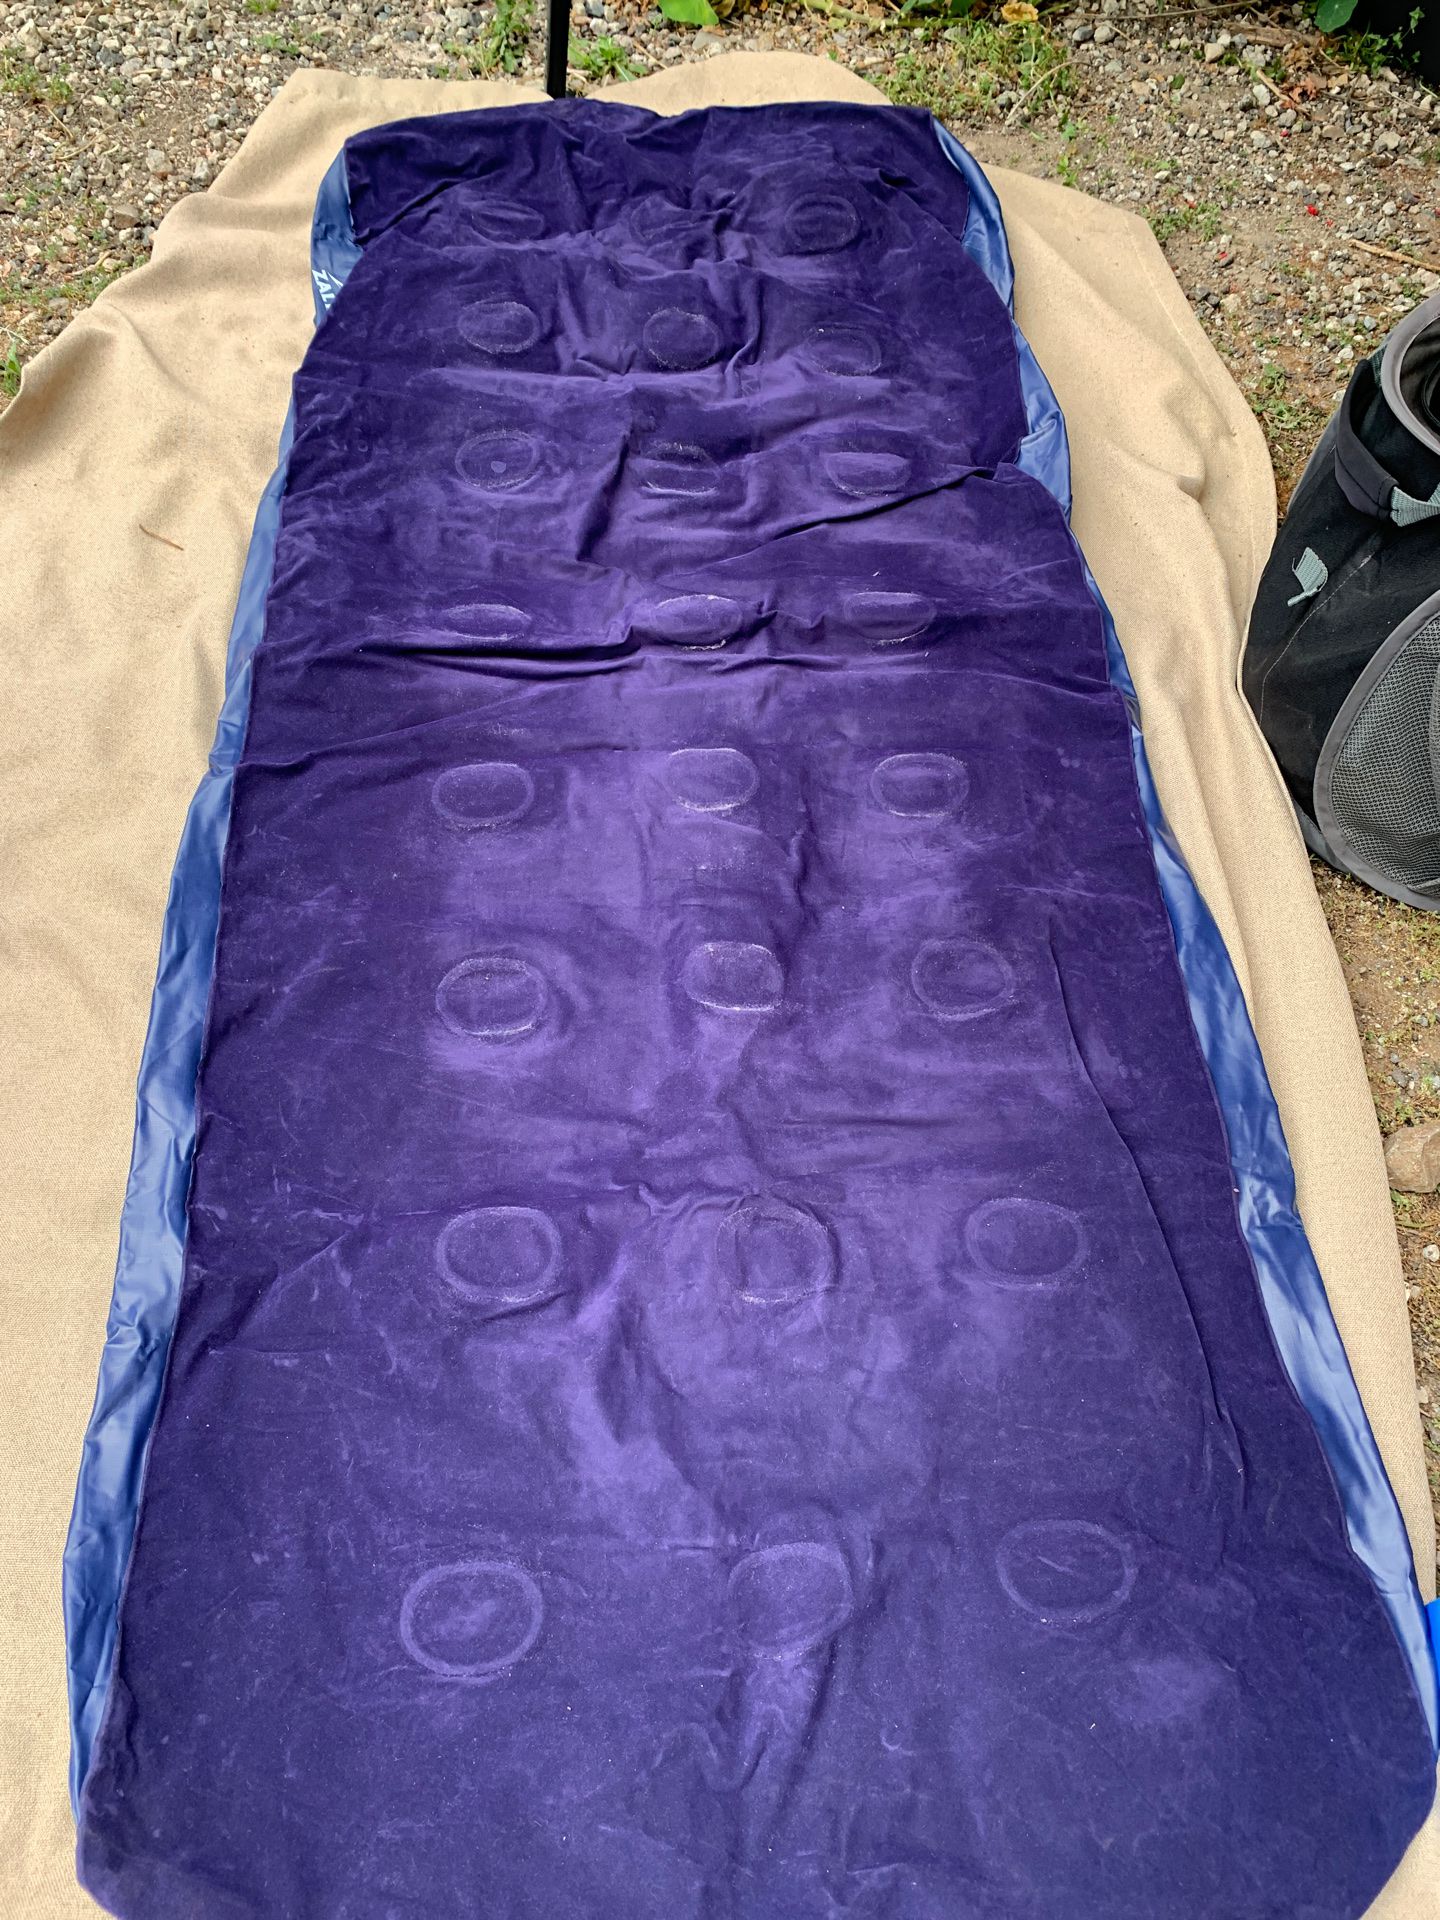 Single size air mattress